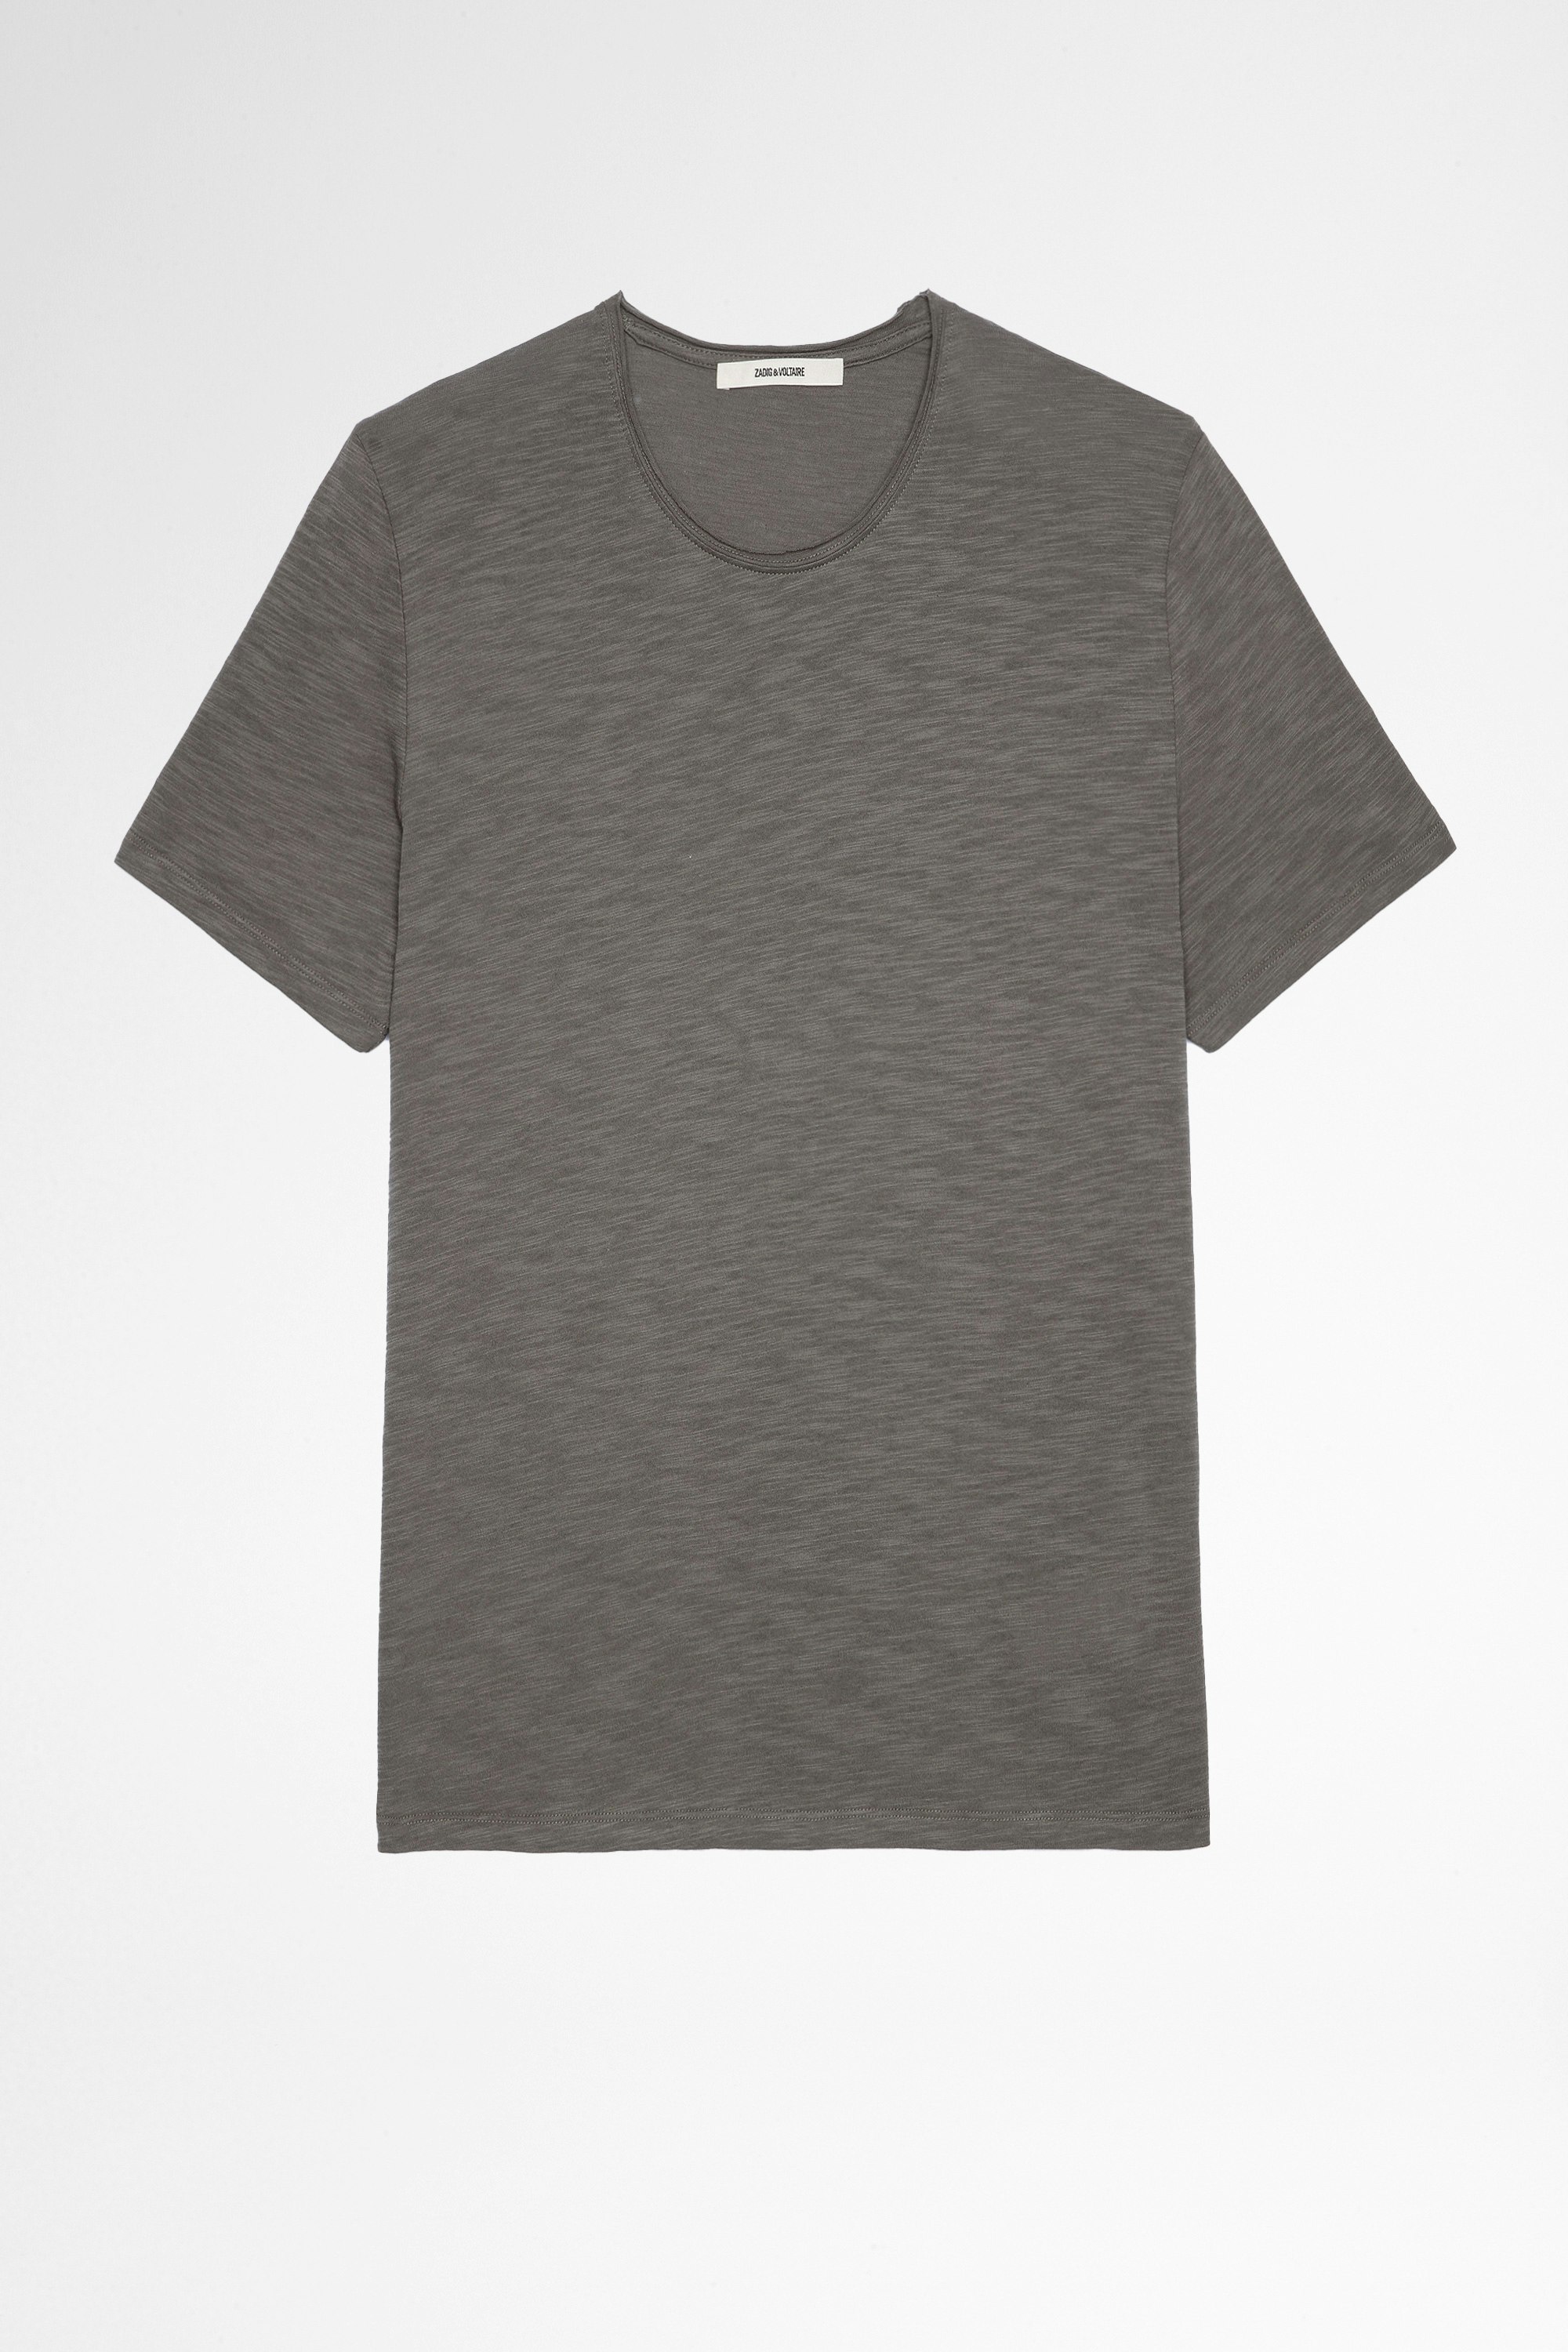 Toby Slub T-Shirt  Men's short-sleeved t-shirt in grey cotton